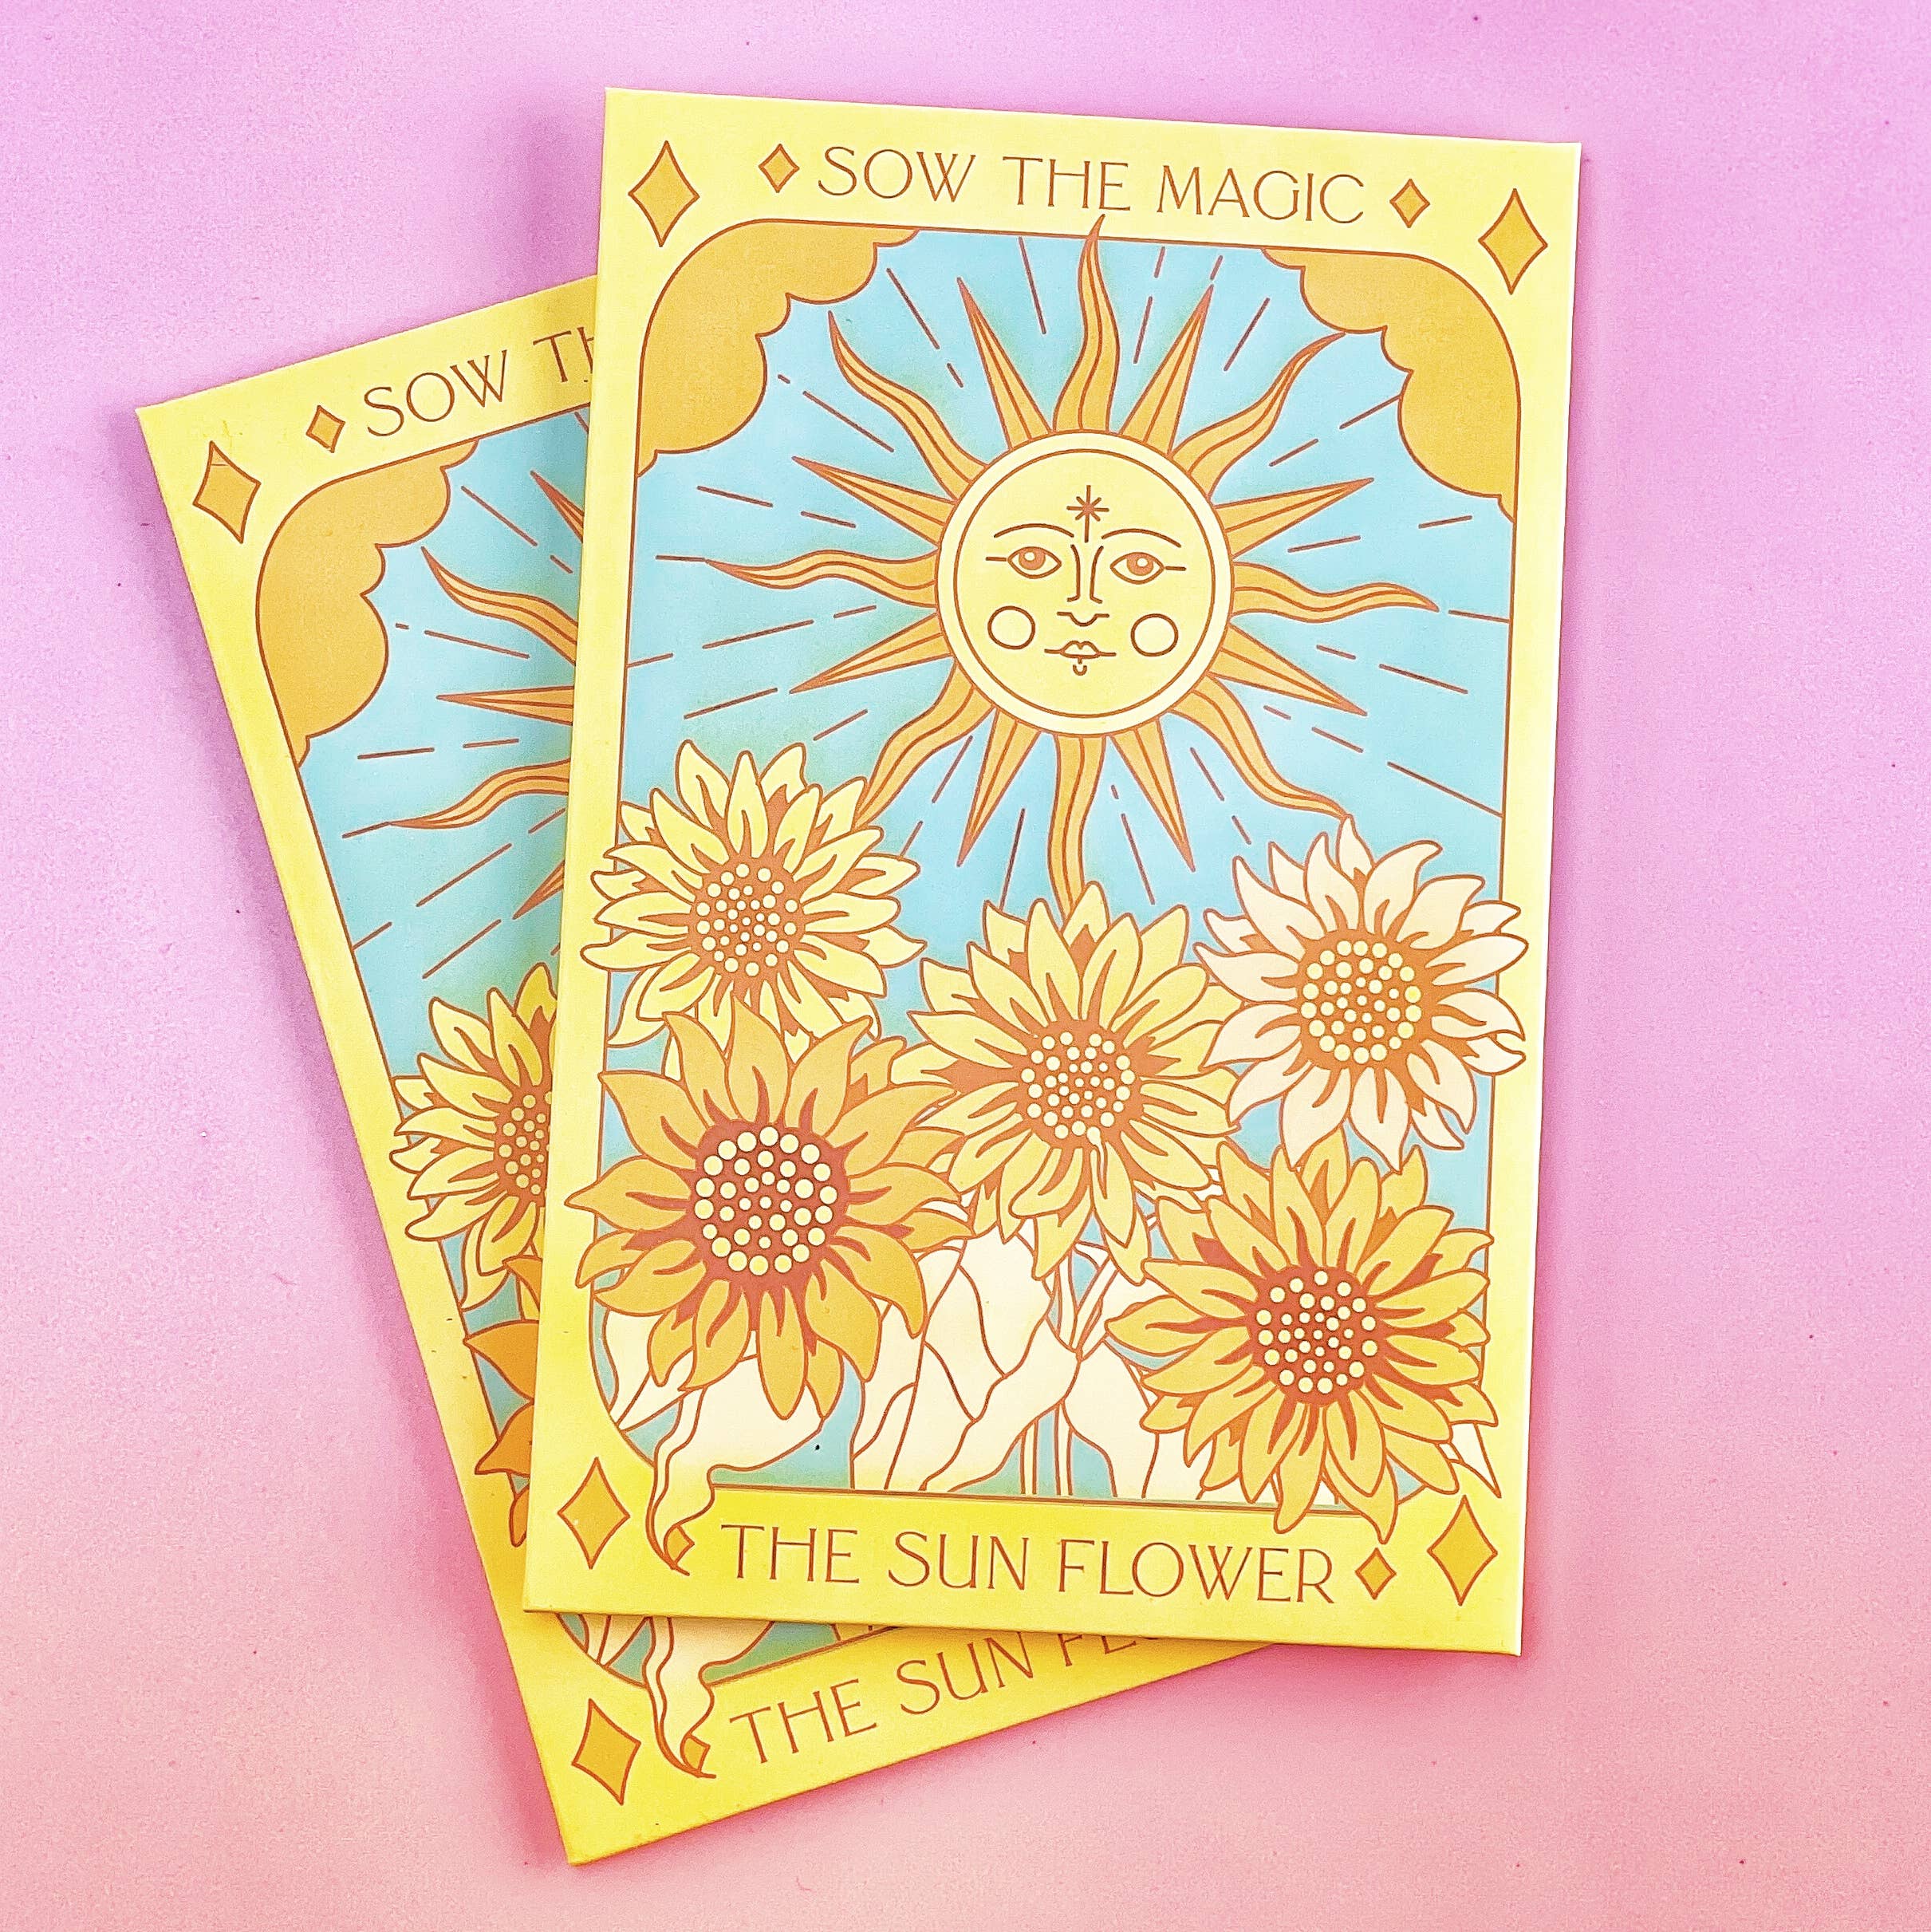 The Sunflower (Ring of Fire) Tarot Garden + Gift Seed Packet